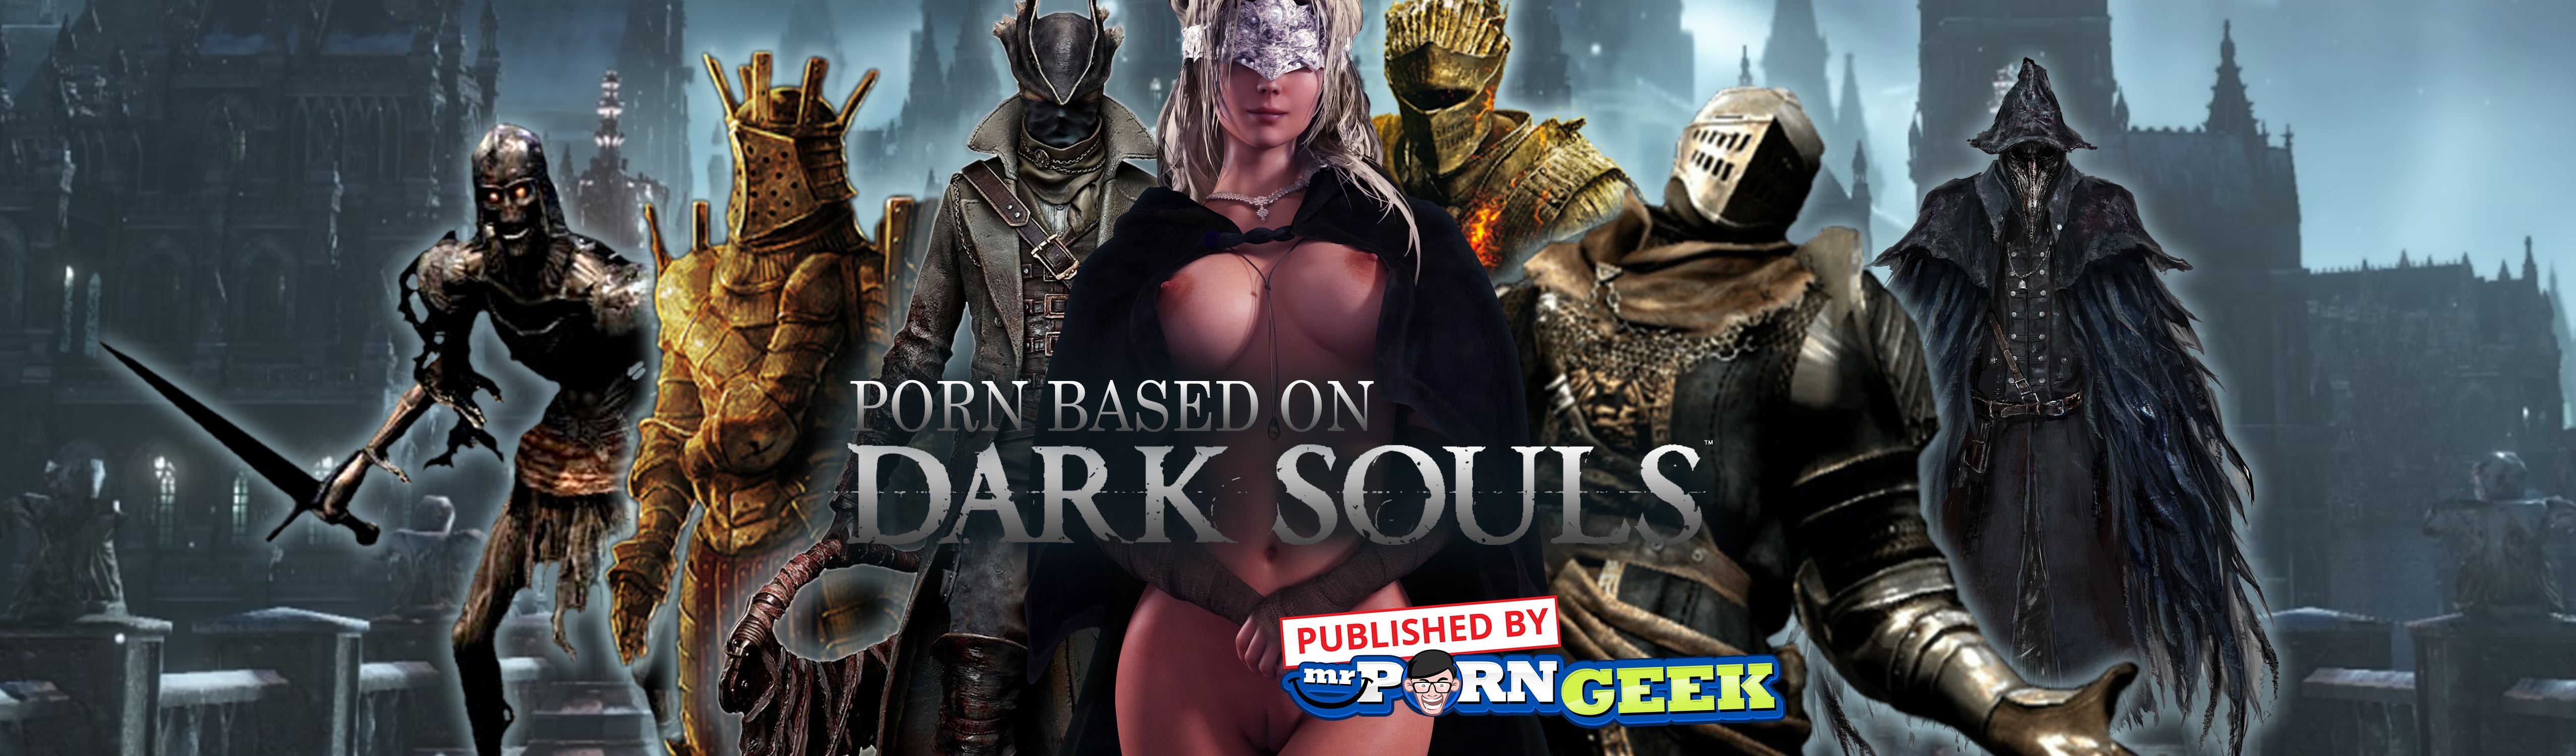 Porn Based On The Dark Souls Games - MrPornGeek's Blog